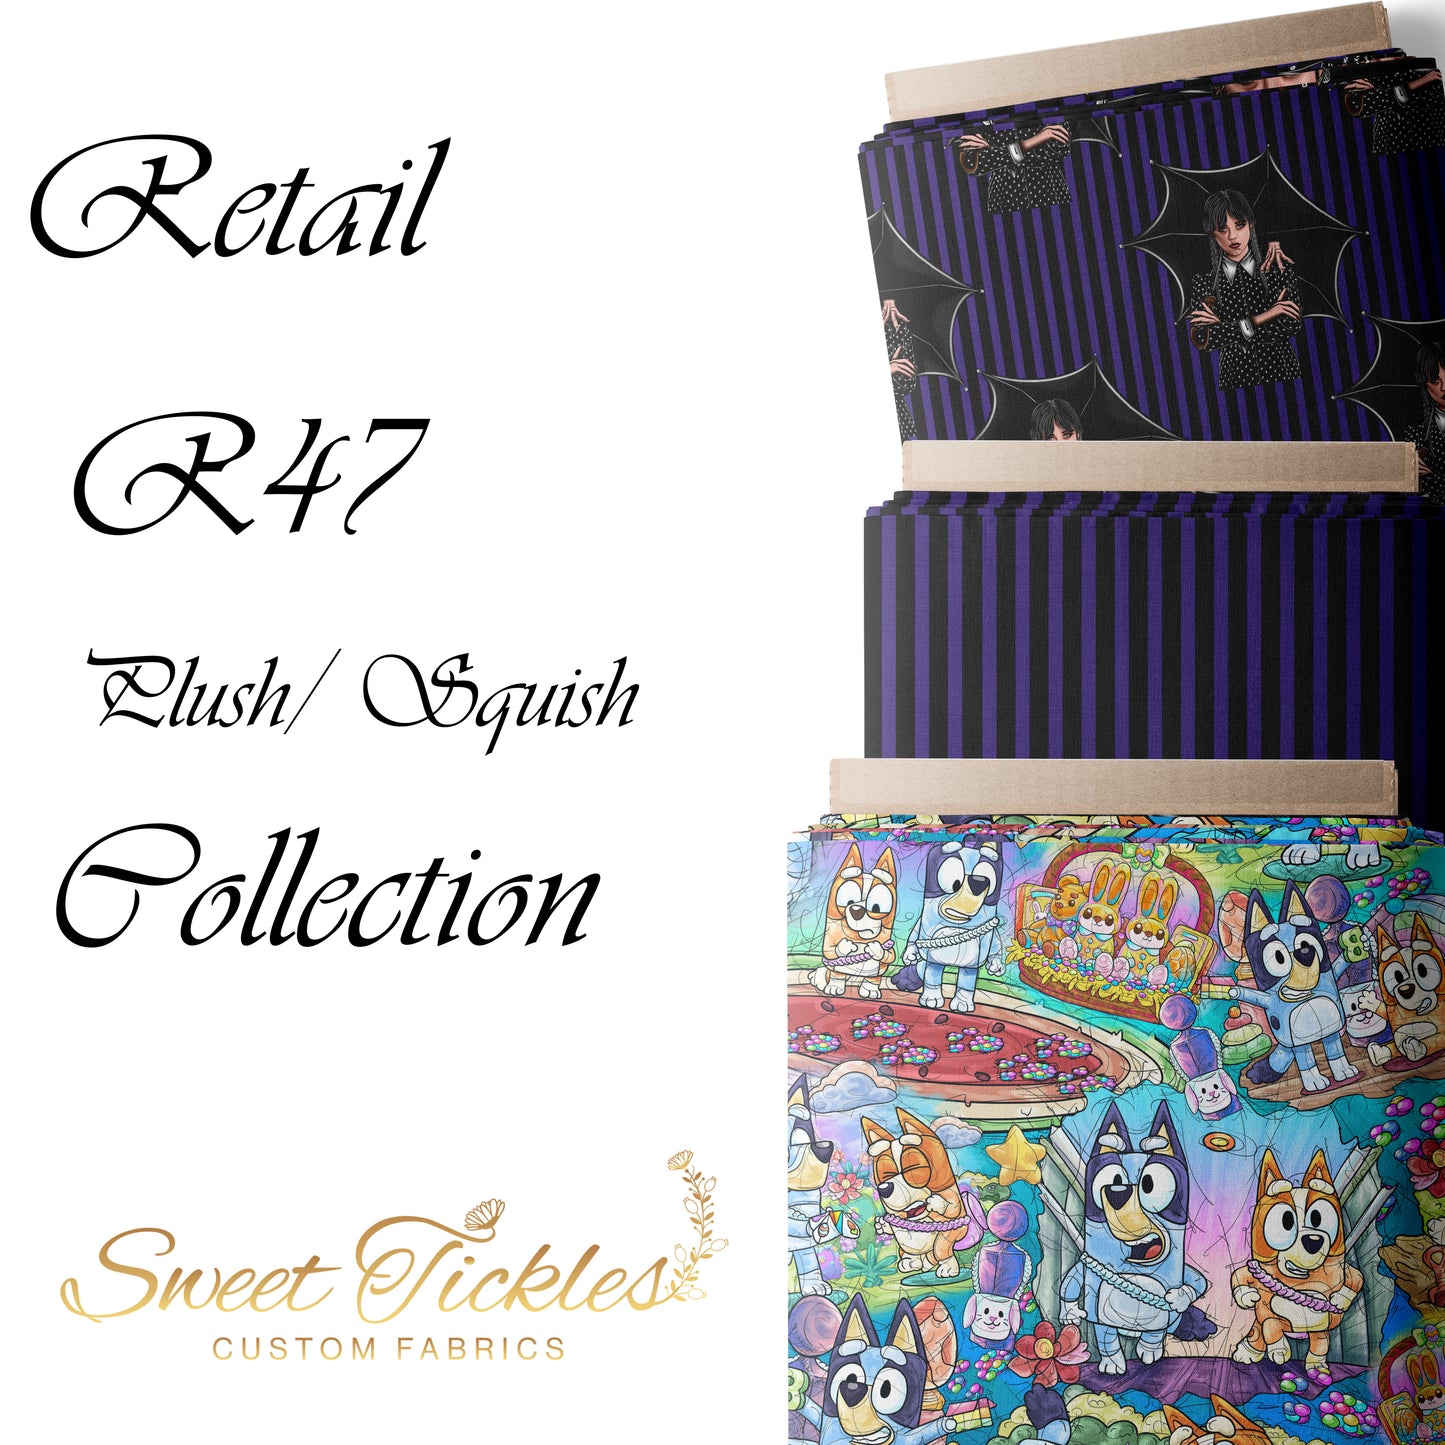 Retail R47 Plush Collection